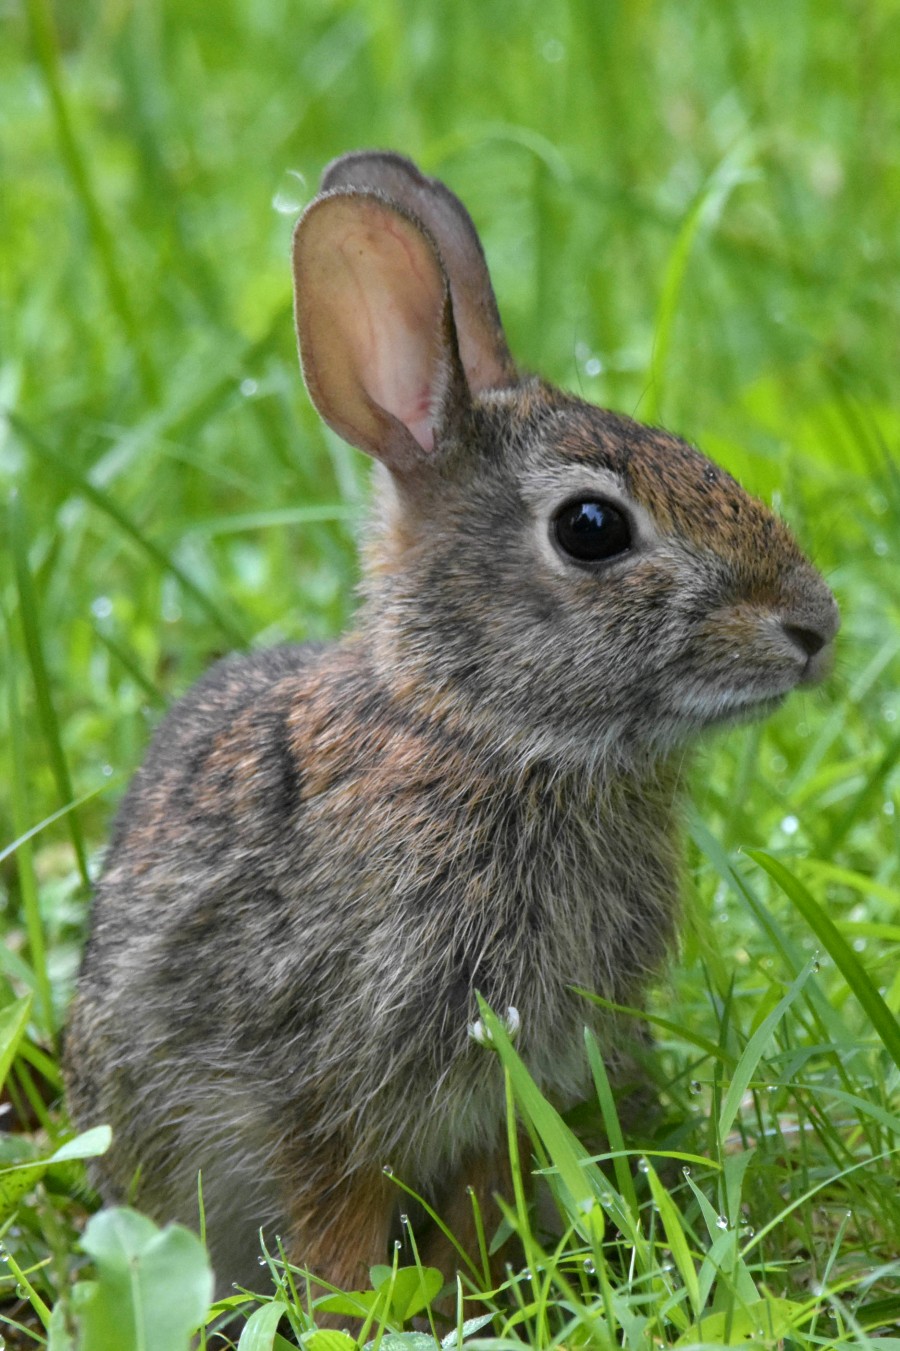 Baby rabbit in closeup profile.